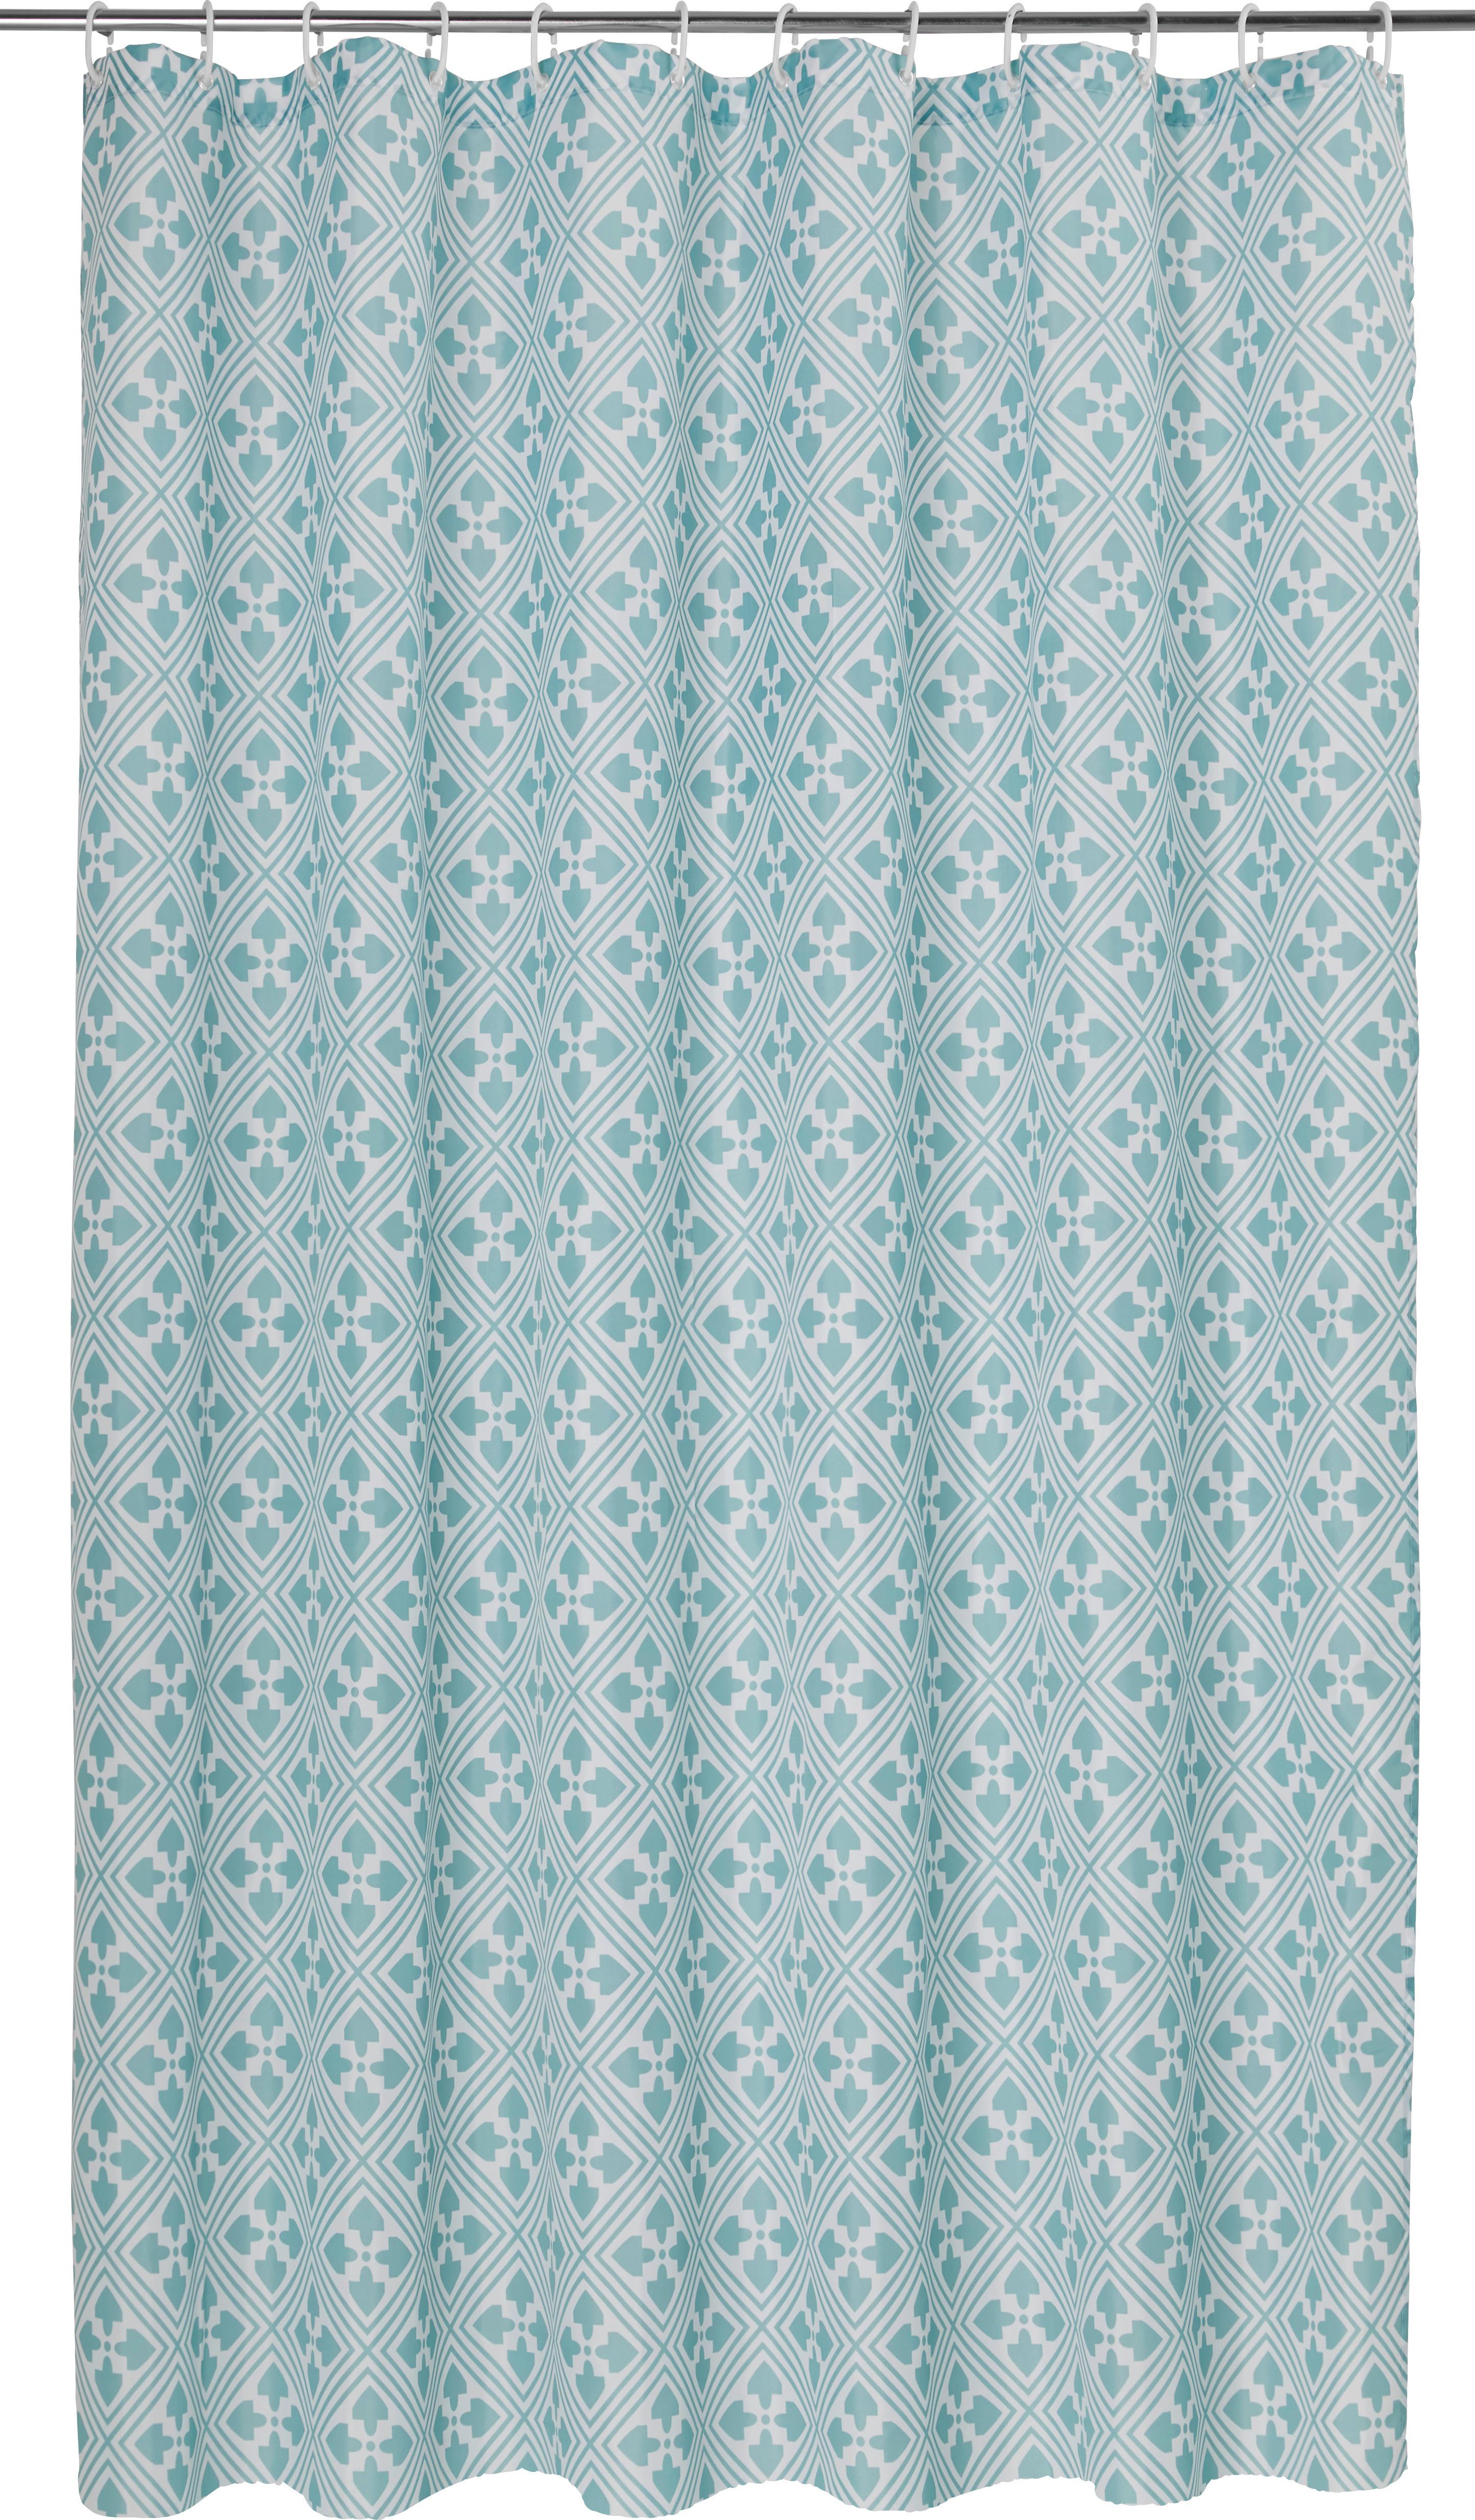 Duschvorhang Spain in Türkis ca. 180x200cm - Türkis, LIFESTYLE, Textil (180/200cm) - Modern Living